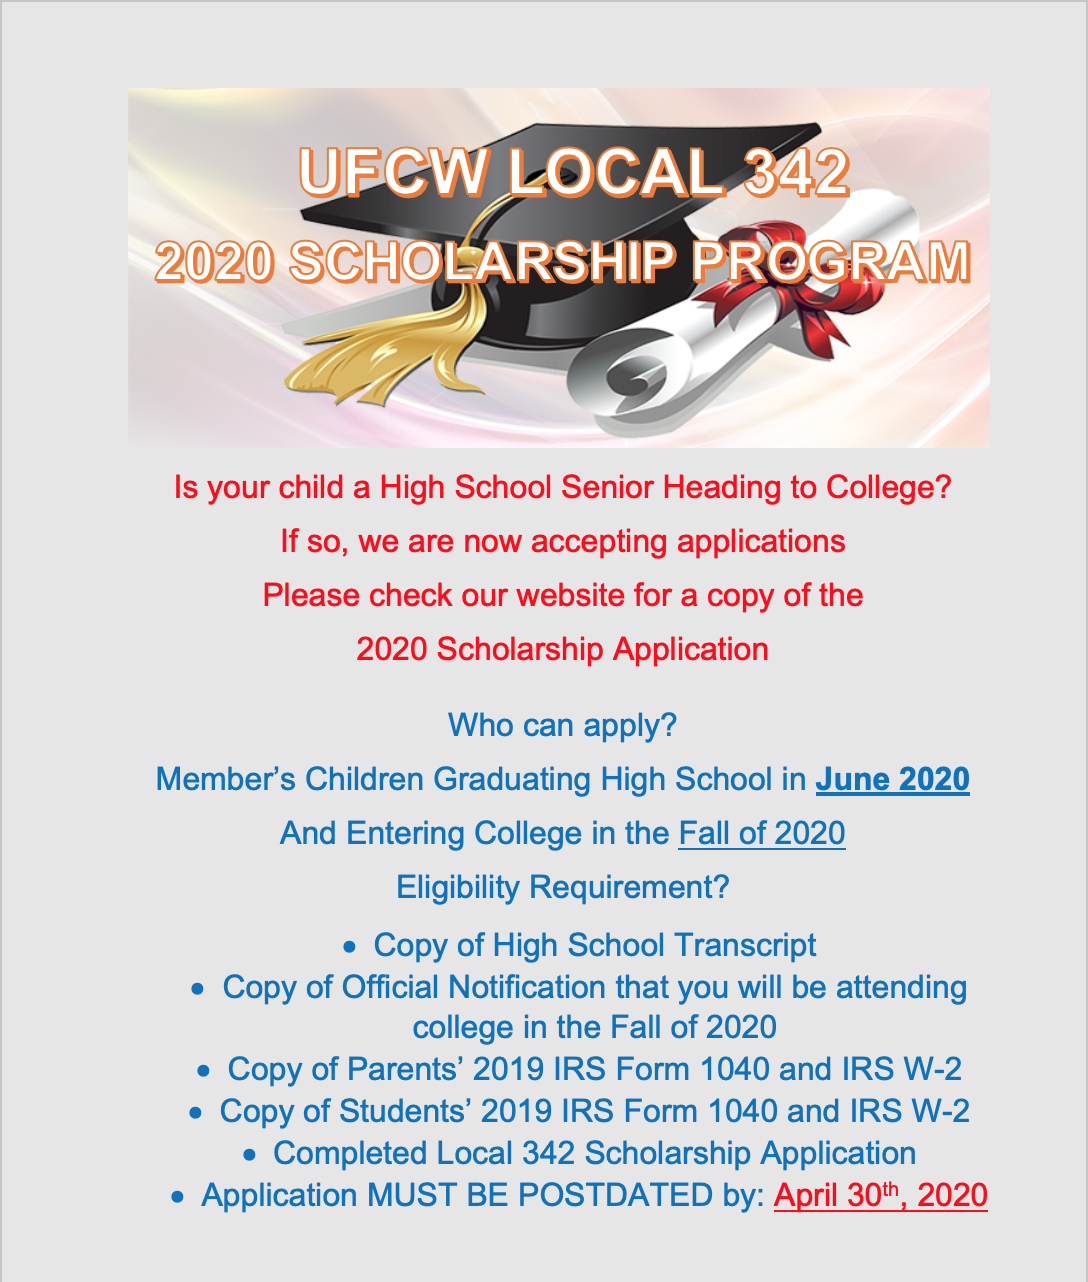 2020 Local 342 Scholarship Program UFCW Local 342